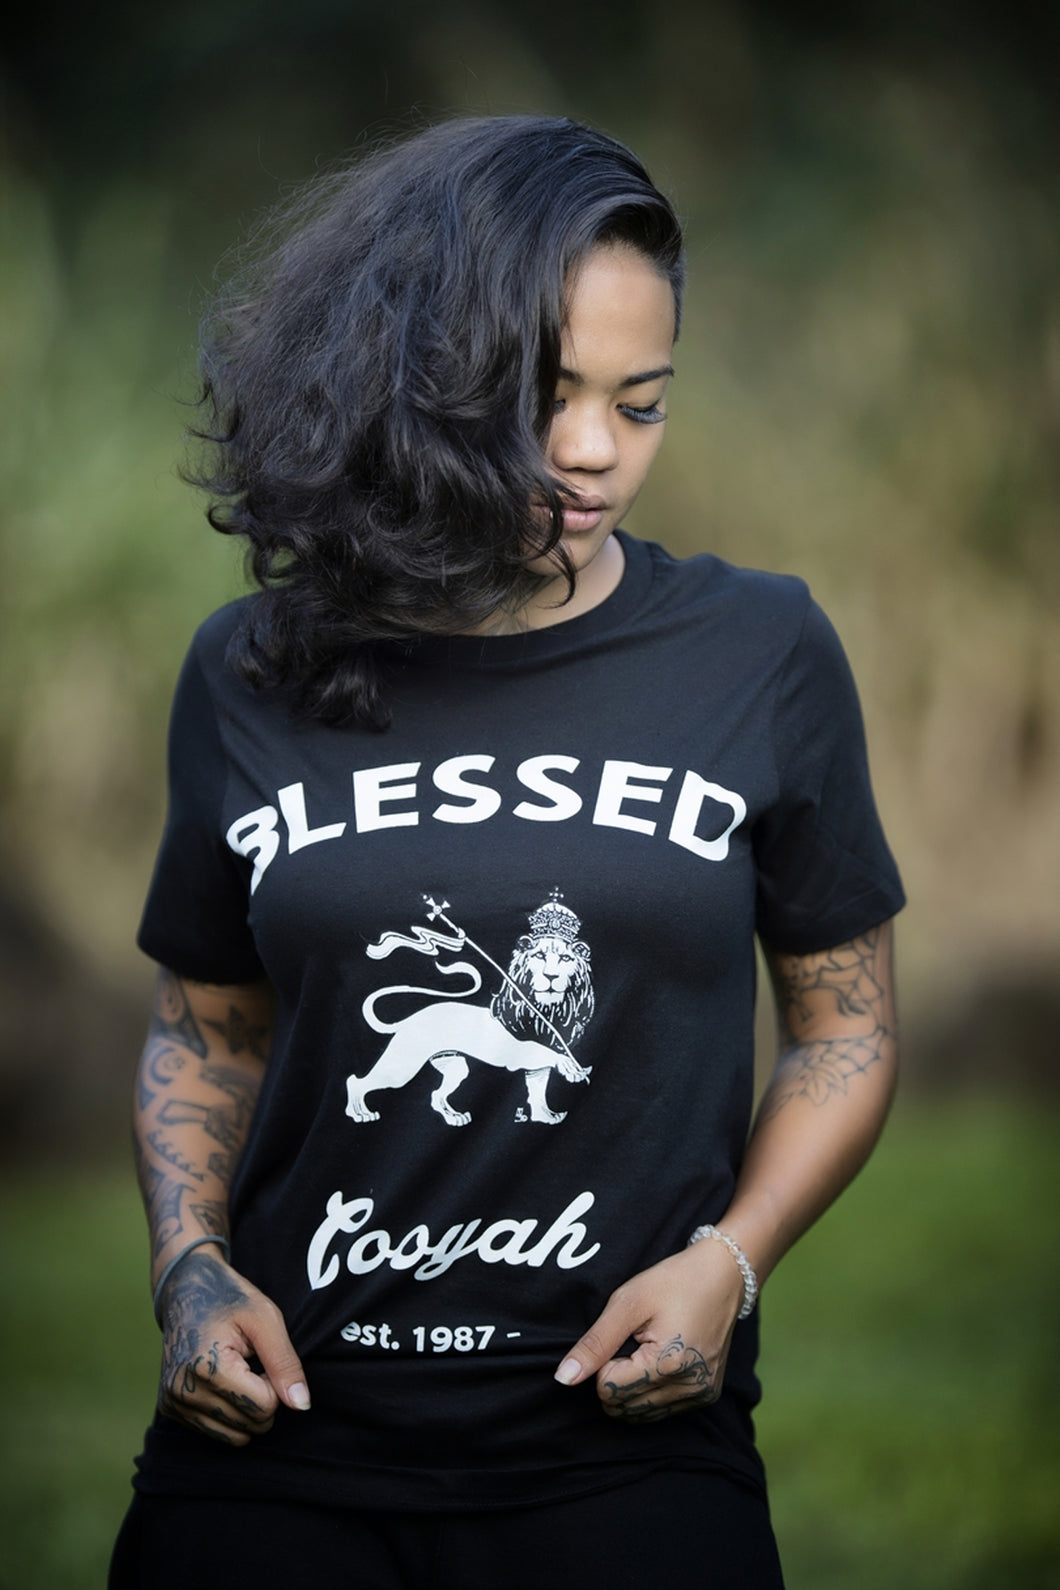 Cooyah Blessed Rasta Lion women's tee in black